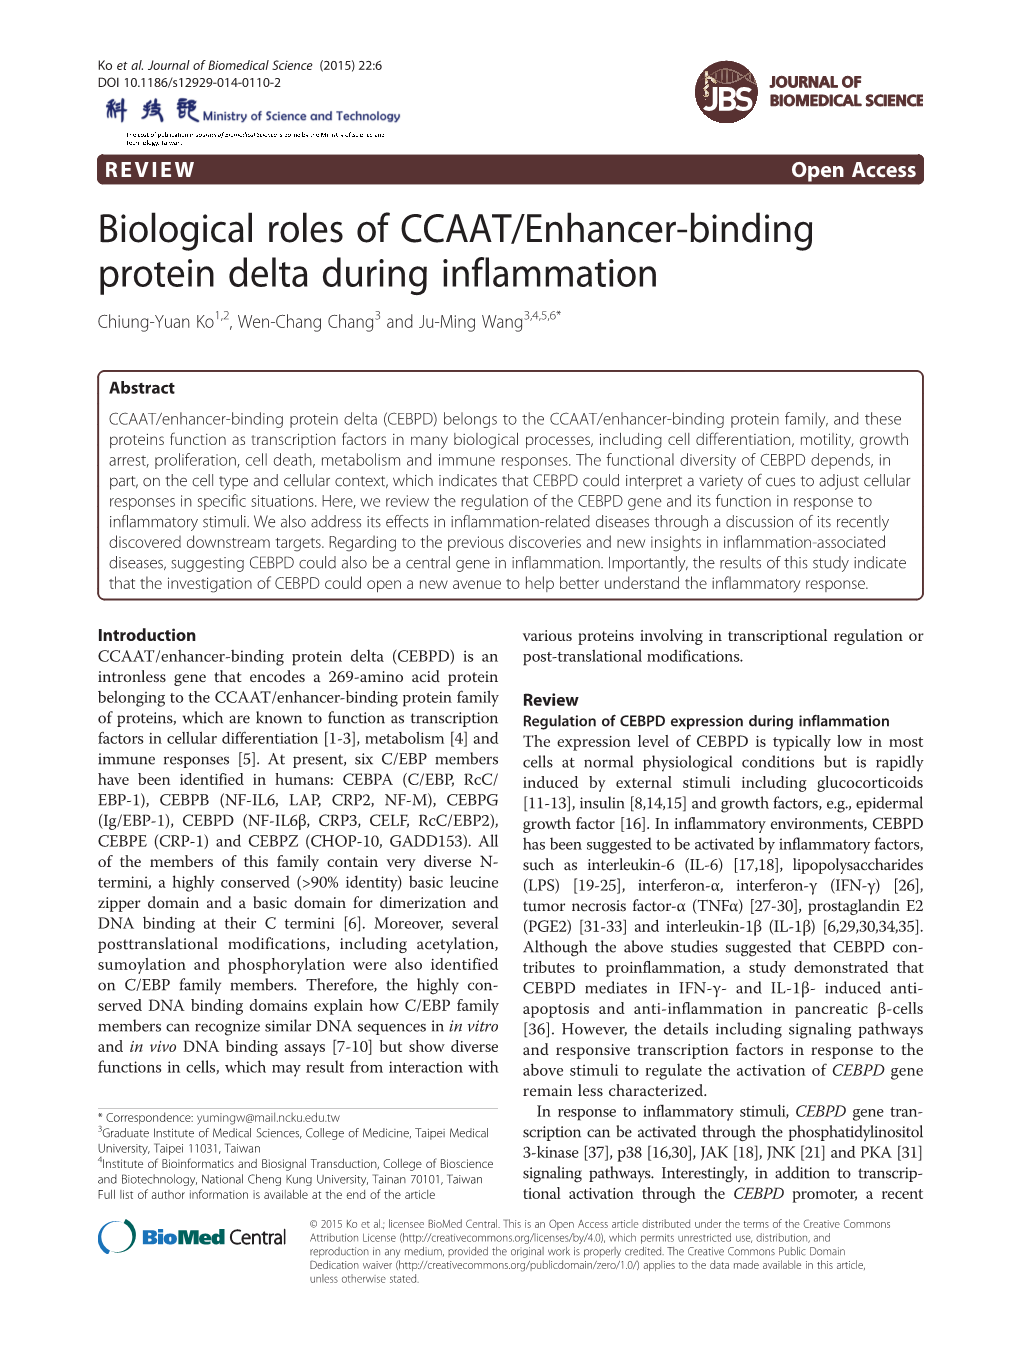 Biological Roles of CCAAT/Enhancer-Binding Protein Delta During Inflammation Chiung-Yuan Ko1,2, Wen-Chang Chang3 and Ju-Ming Wang3,4,5,6*